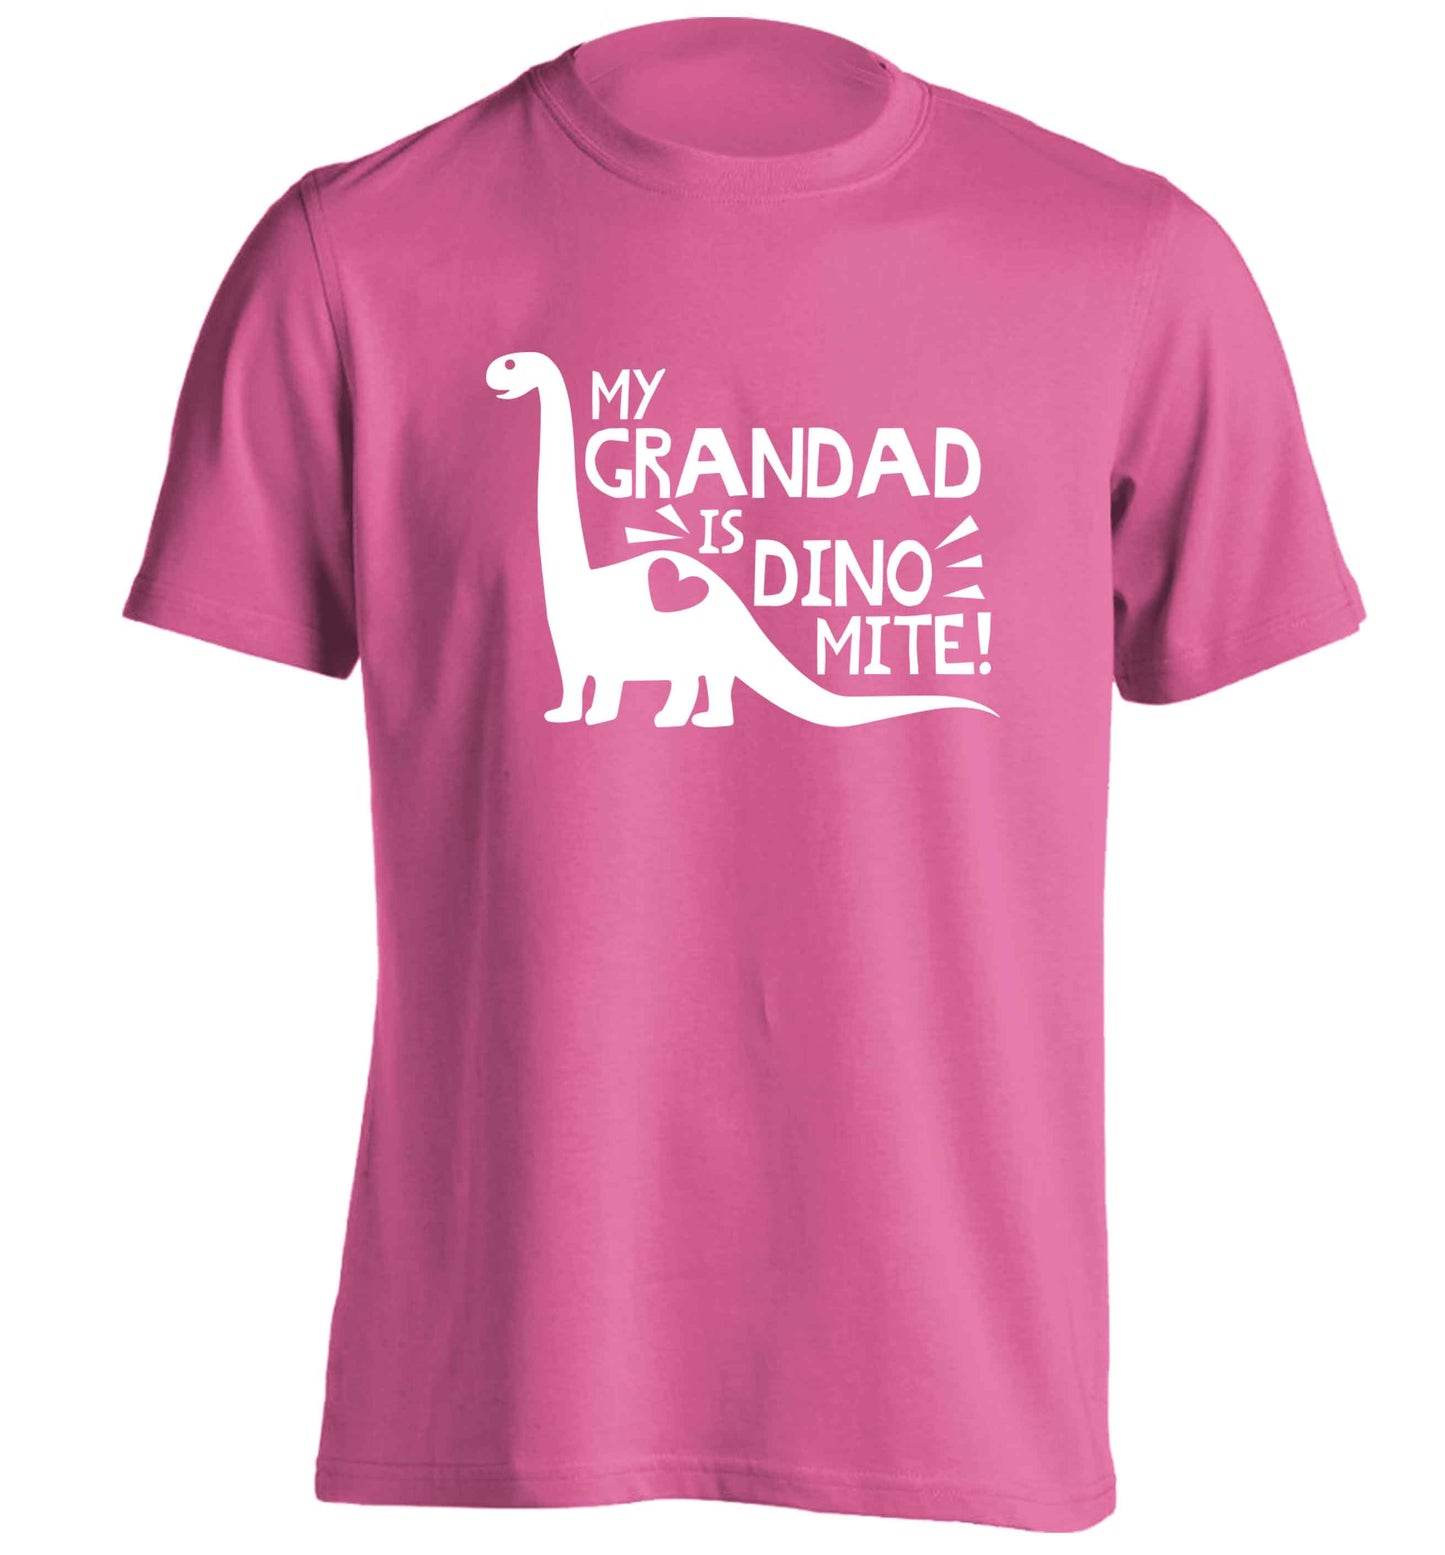 My grandad is dinomite! adults unisex pink Tshirt 2XL